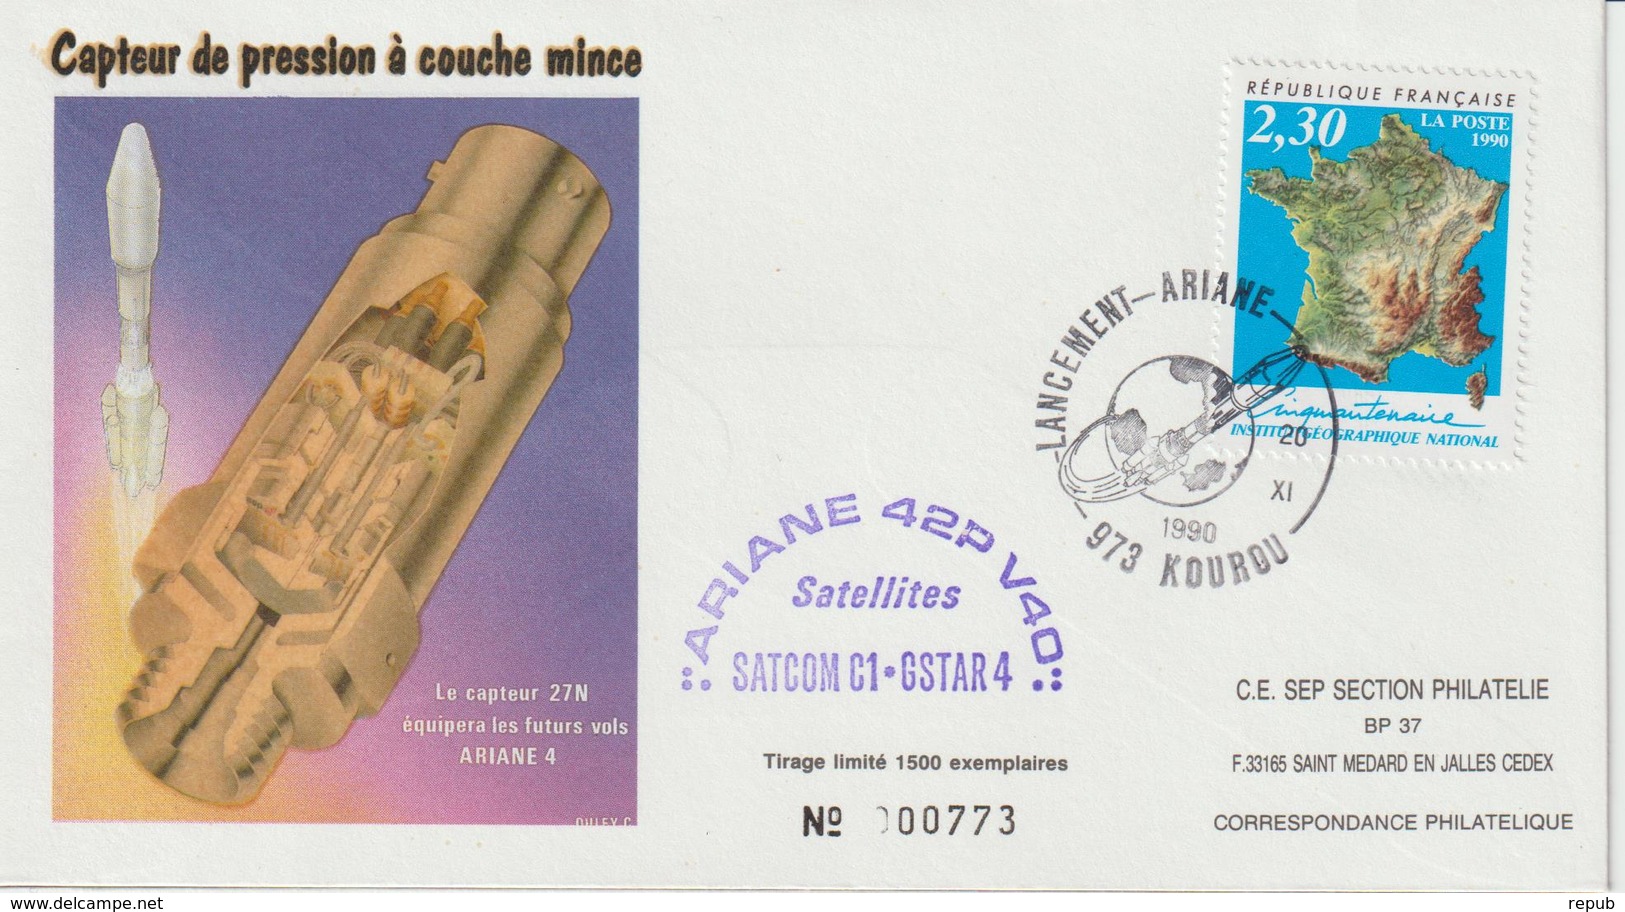 France Kourou 1990 Lancement Ariane Vol 40 - Commemorative Postmarks